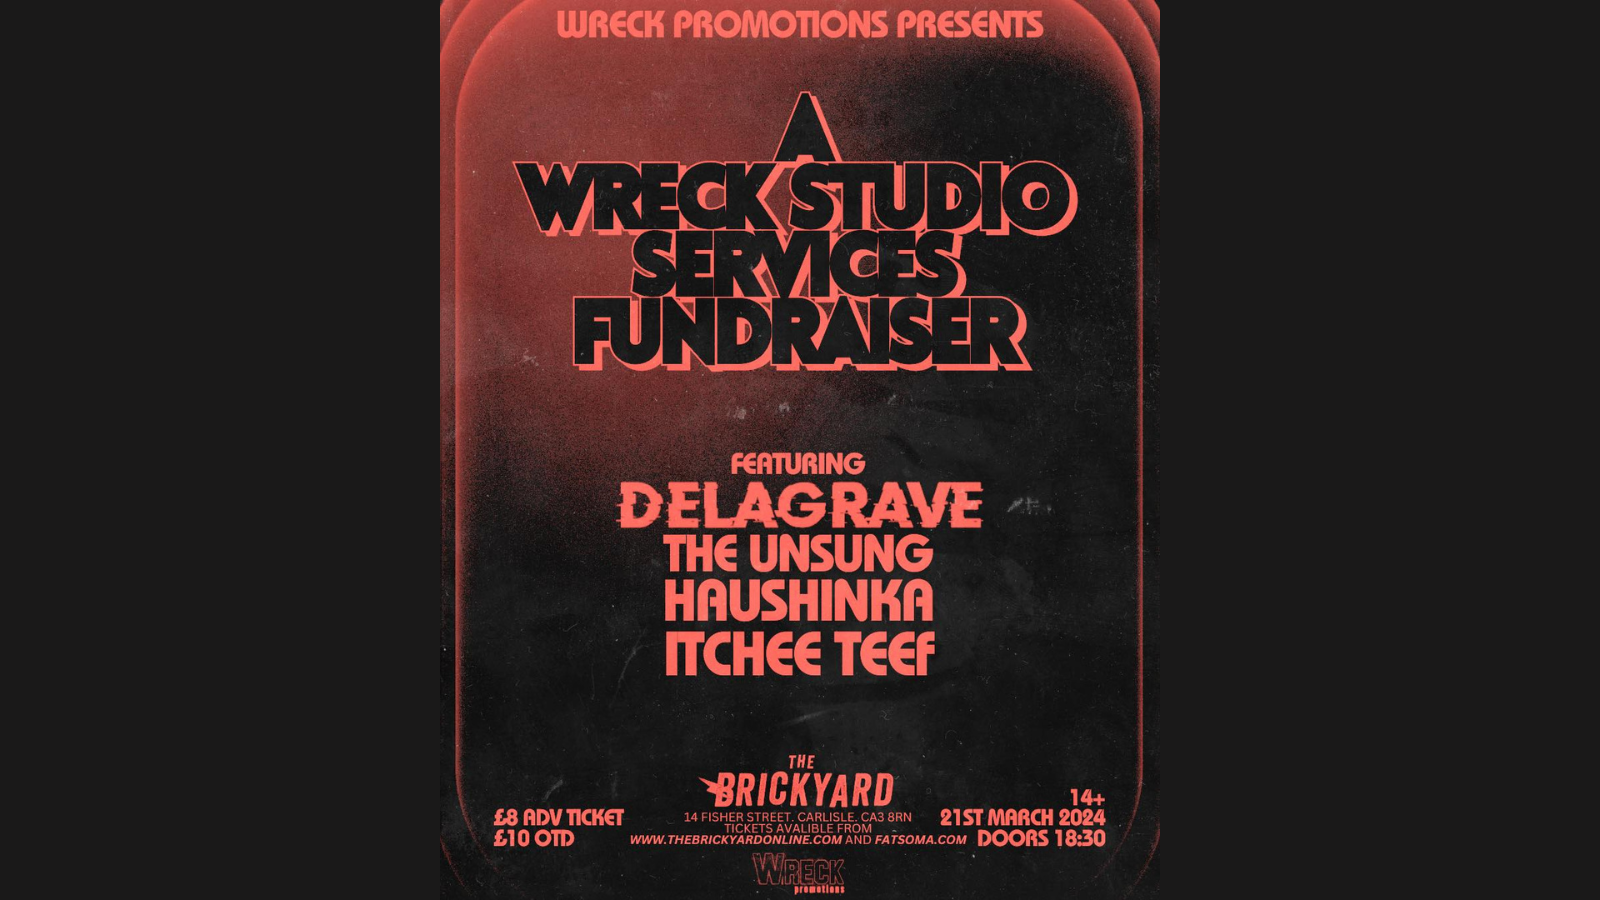 Wreck Studio Services Presents – Delagrave, The Unsung, Haushinka, ItcheeTeef